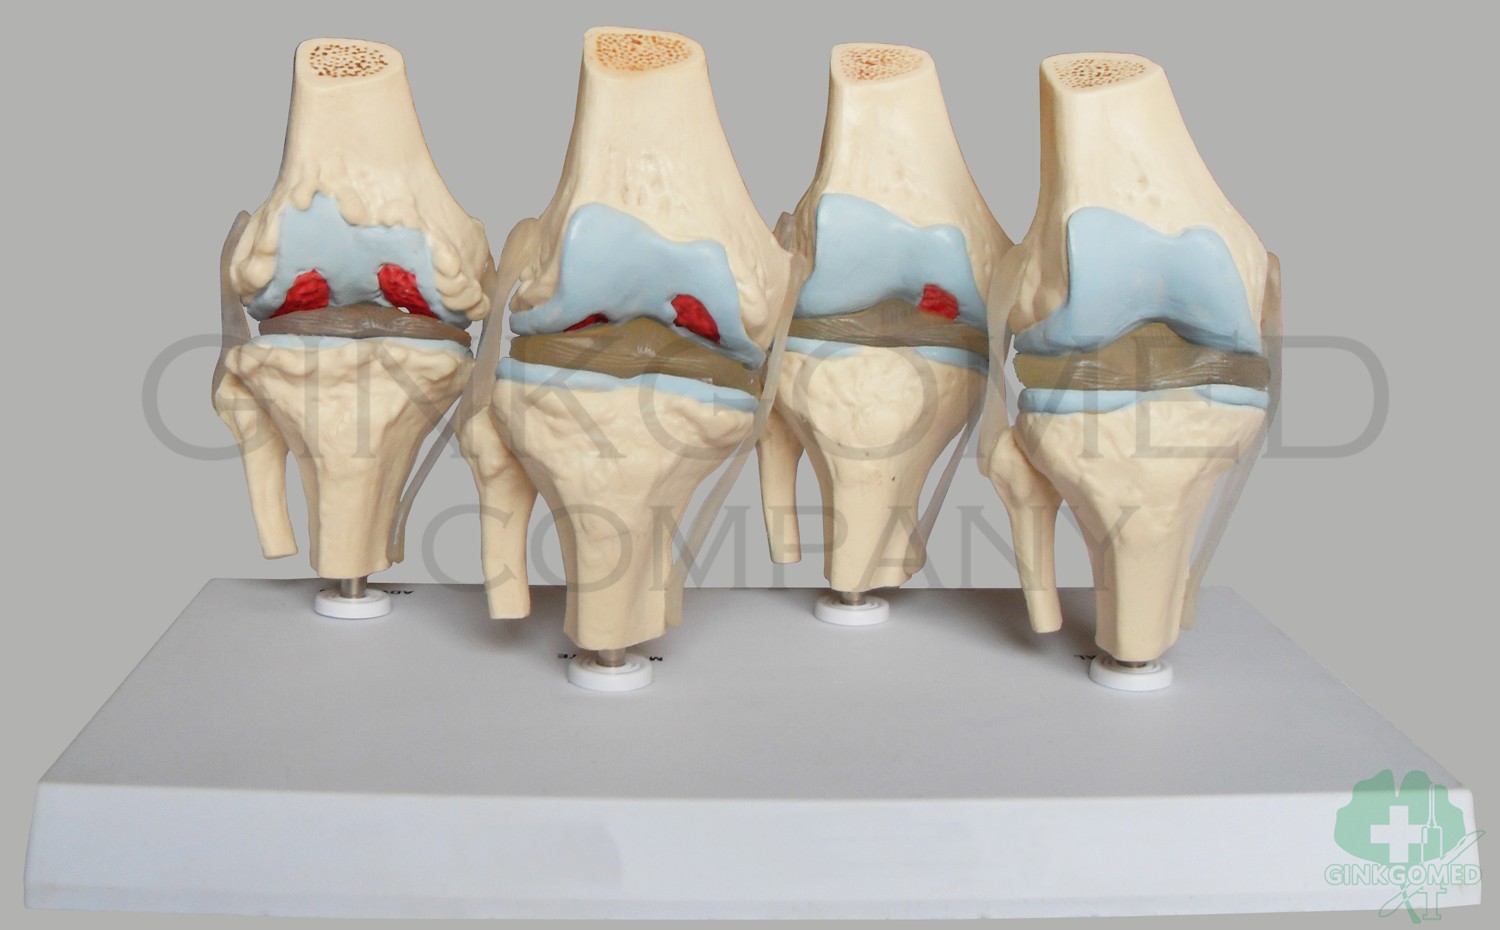 GM-100015  Disease Progress of Knee Joint